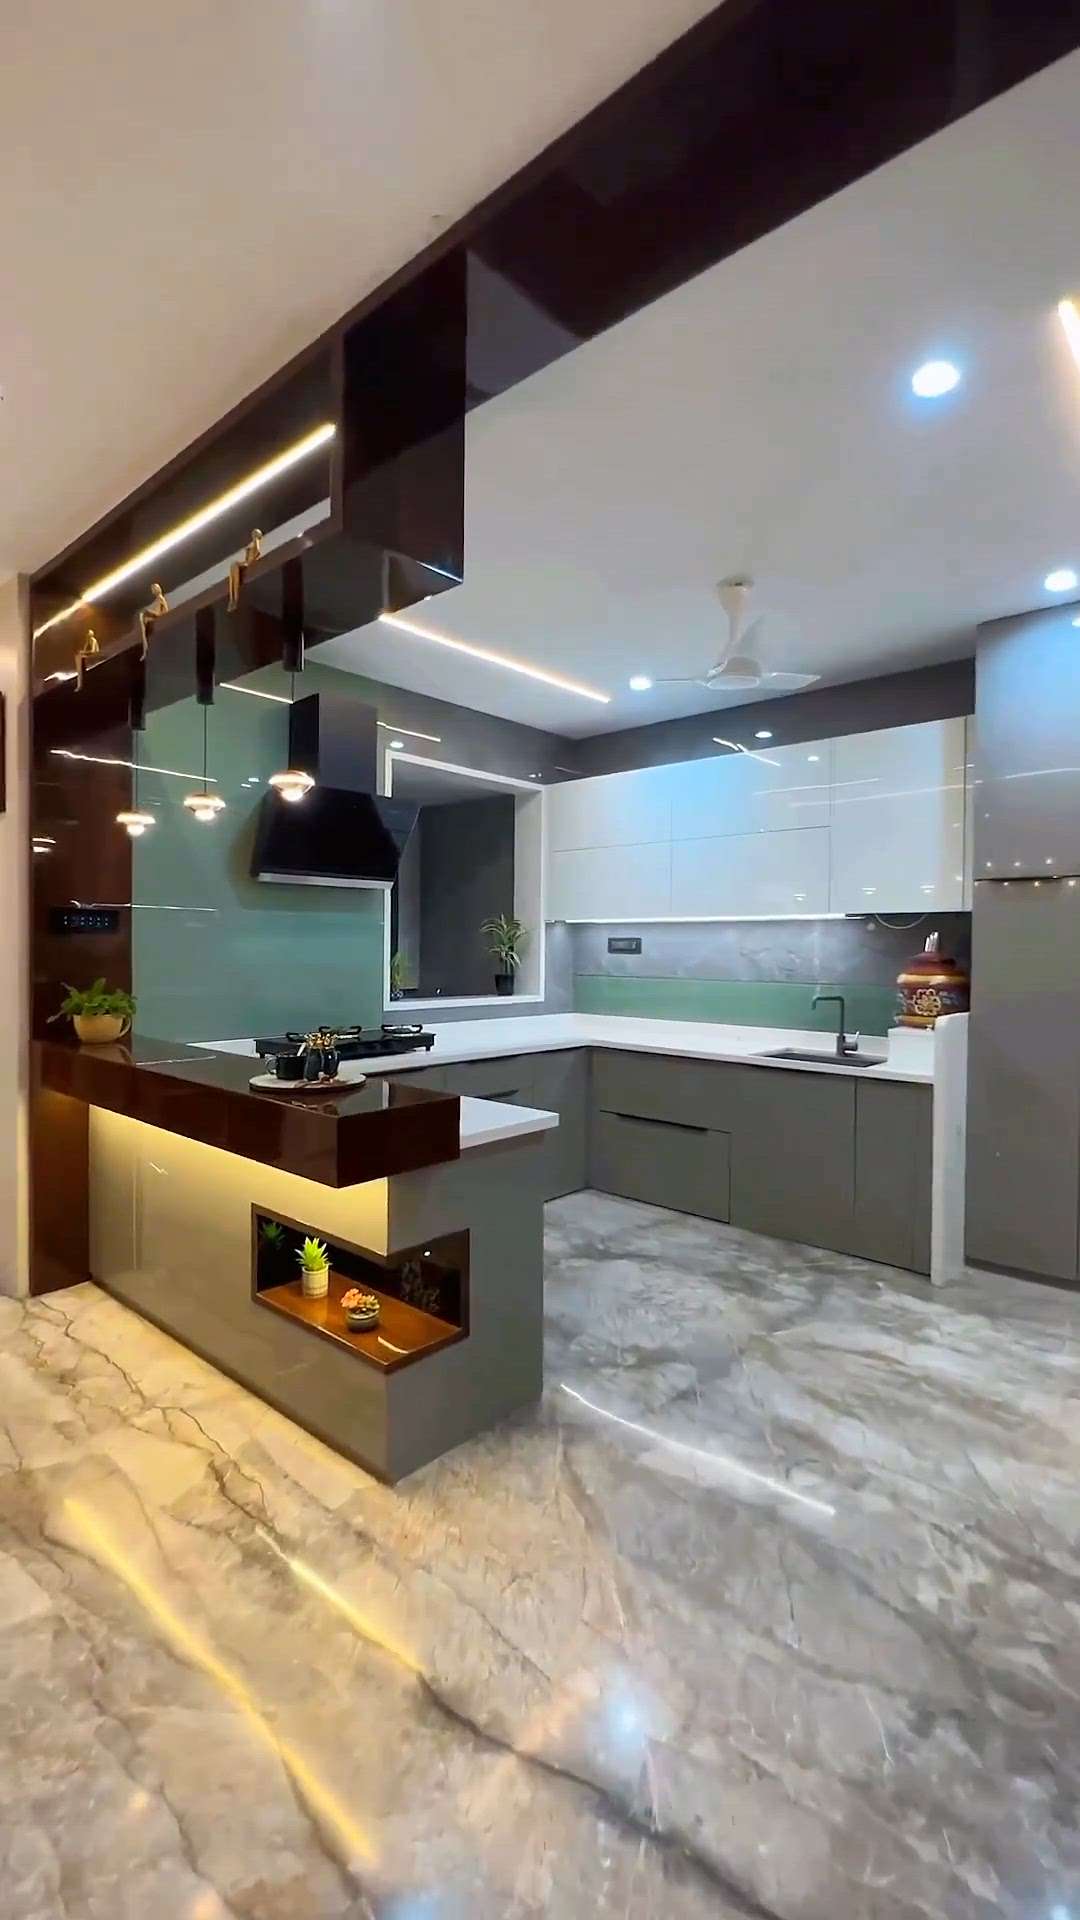 Latest Kitchen makeover.
Modular kitchen in faridabad by Majestic modular kitchens Pvt Ltd.
#modularkitchendesign
#LShapeKitchen
#kitchendesign
#ModularKitchen
#lshapedkitchen
#ushapekitchen
#modular_kitchen_in_faridabad
#interiordesignerinfaridabad
#livspace
#livspacefaridabad
#kitchenmakeover
#kitchenmanufacturer
#ACRYLICKITCHEN
#HIGHGLOSSKITCHEN
#bedbackdeisgn
#tvunitdesign
#lcdunitdesign
#homeinteriors
#interiordesignerinfaridabad
WWW.MAJESTICINTERIORS.CO.IN
9911692170